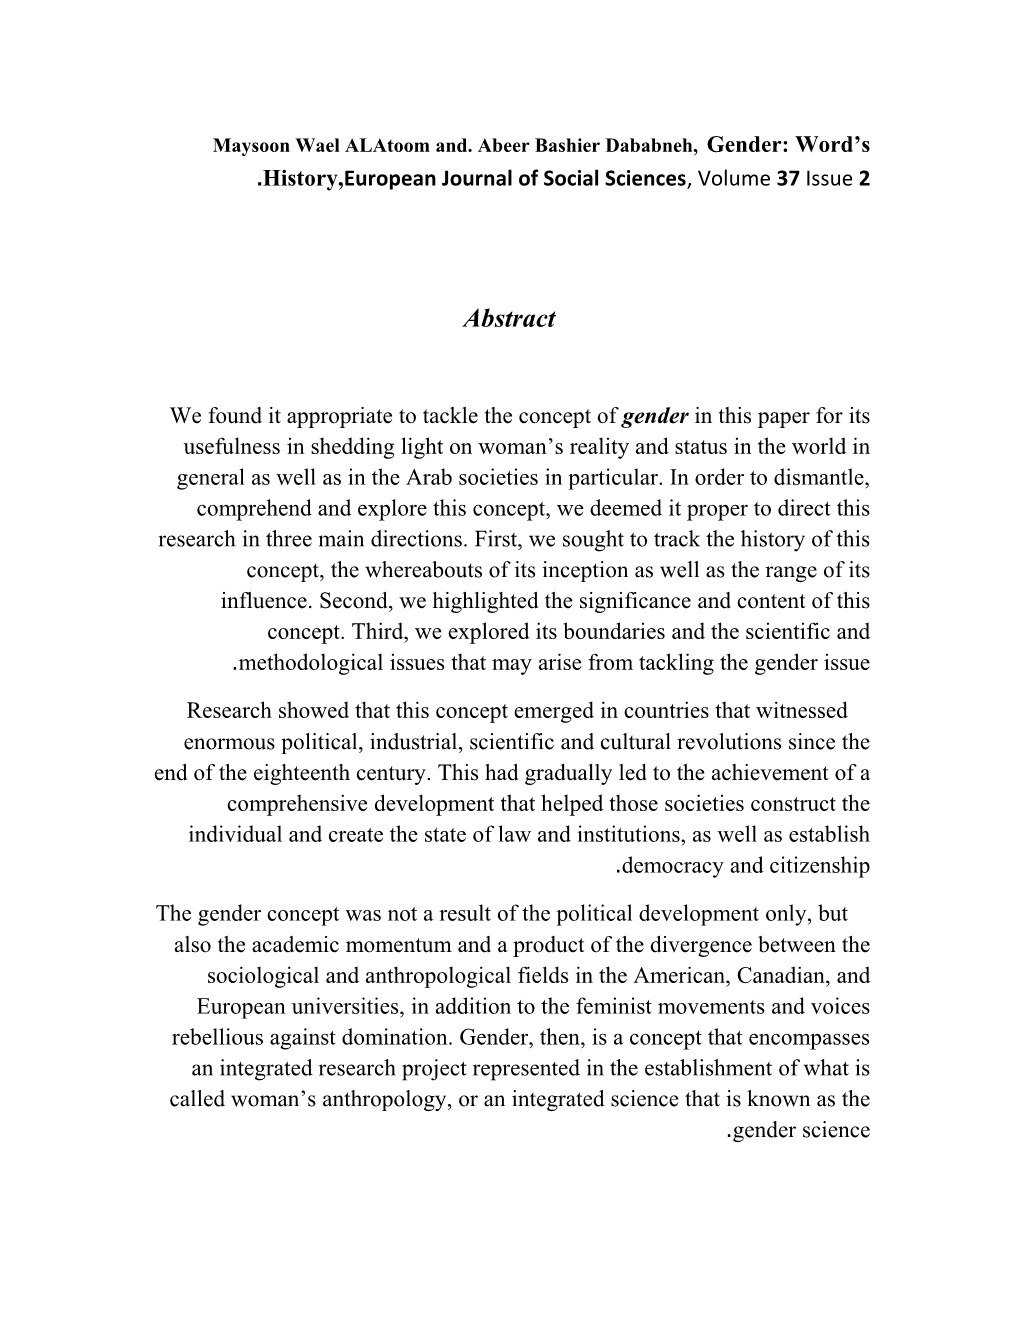 Maysoon Wael Alatoom And. Abeer Bashier Dababneh, Gender: Word S History,European Journal